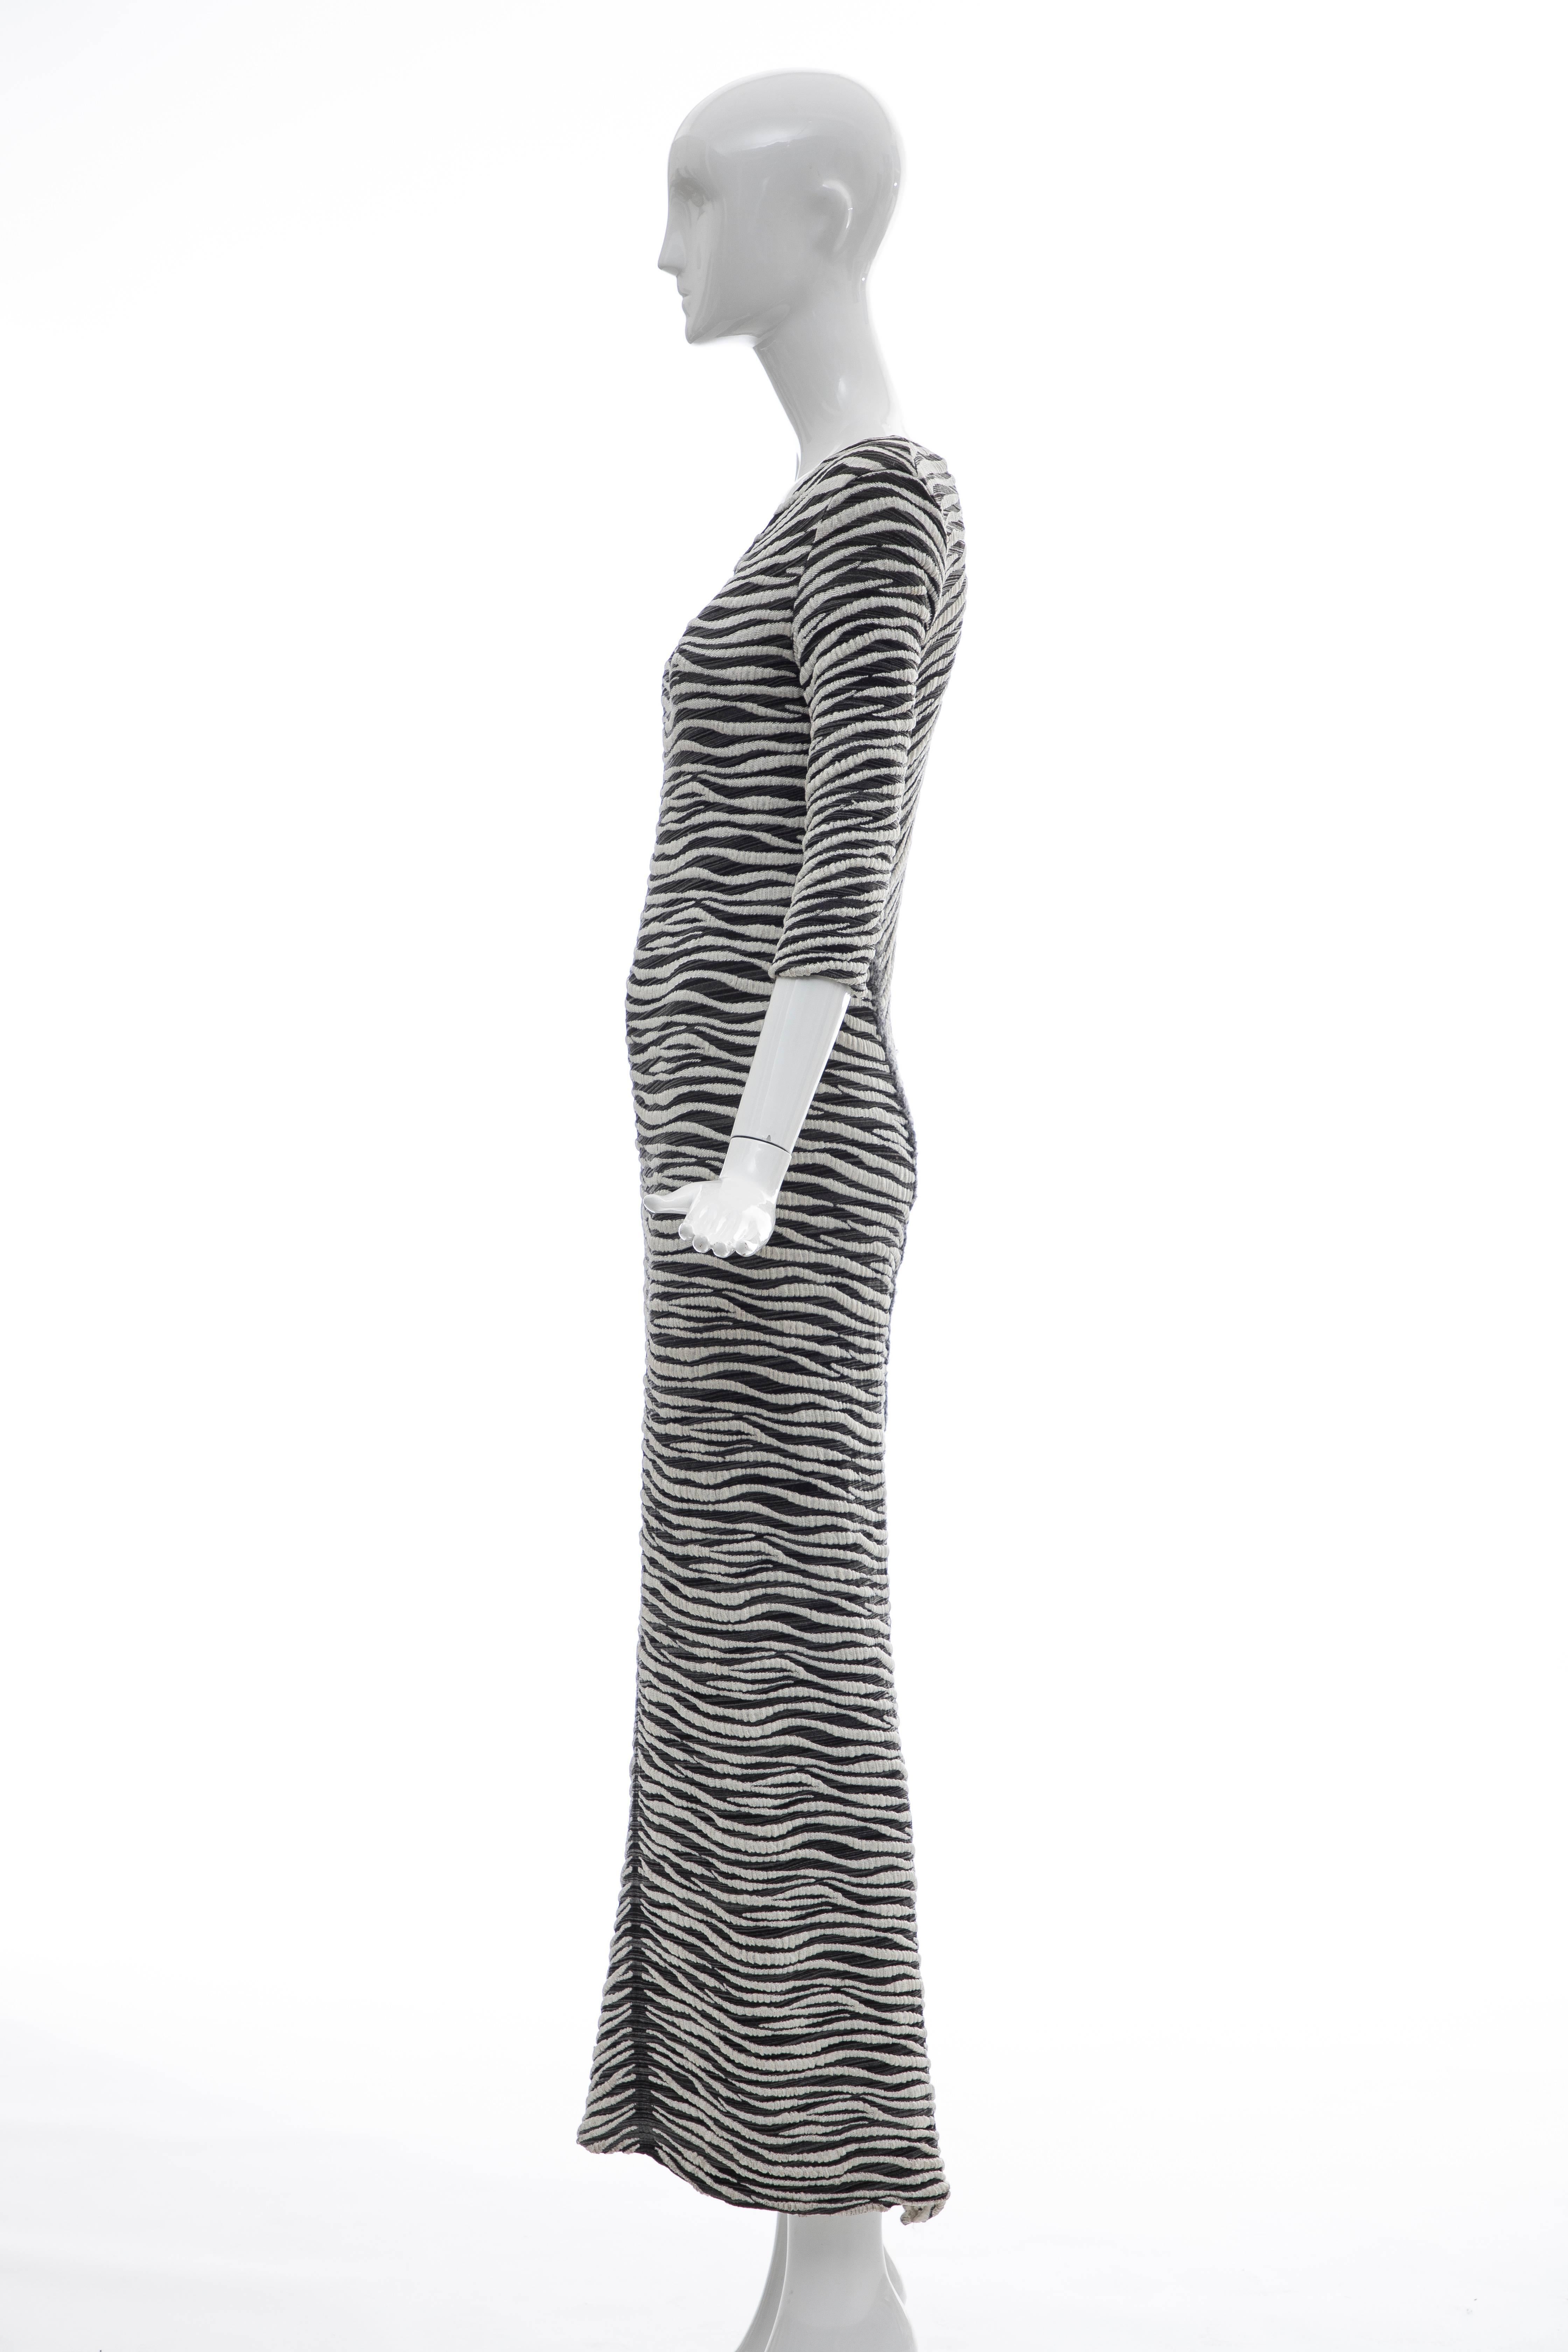 Gianfranco Ferre Long Sleeve Stretch Knit Dress, Circa 1990's For Sale 3